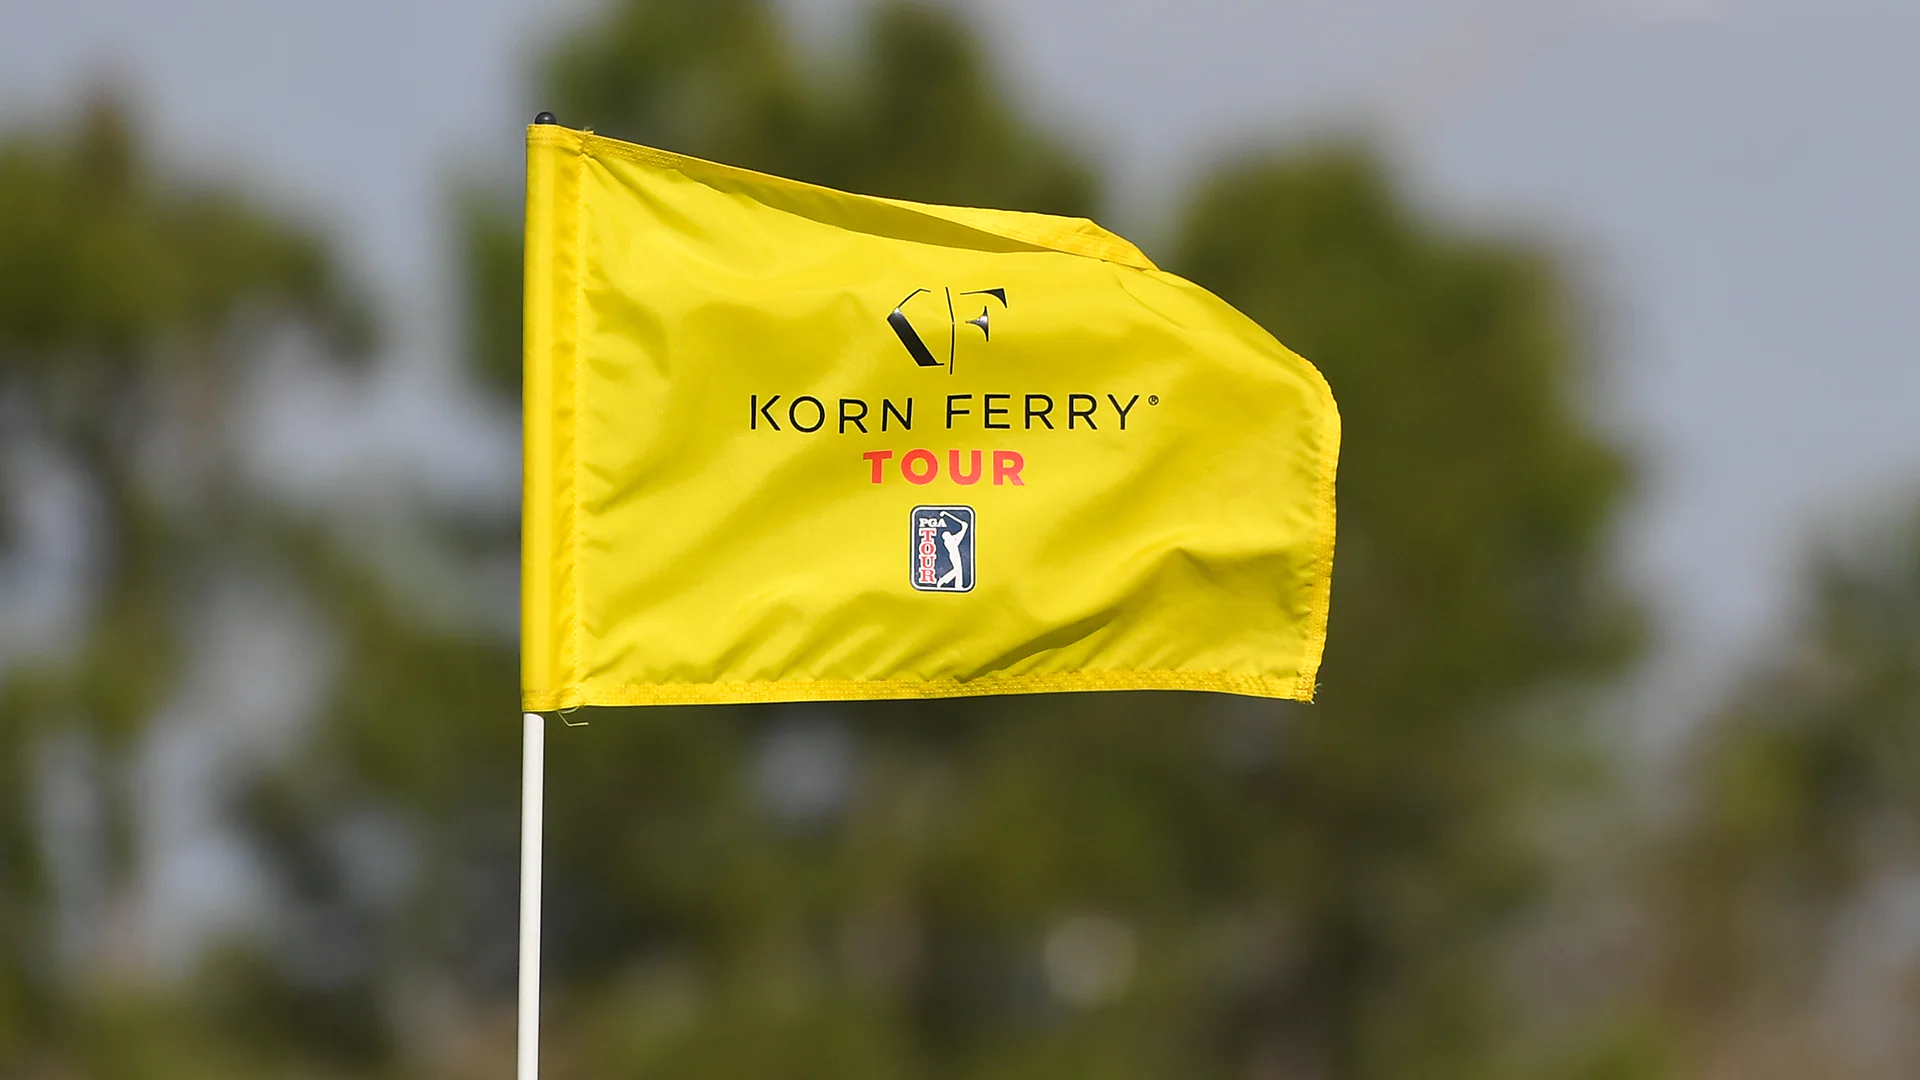 USGA announces new U.S. Open exemption for Korn Ferry Tour